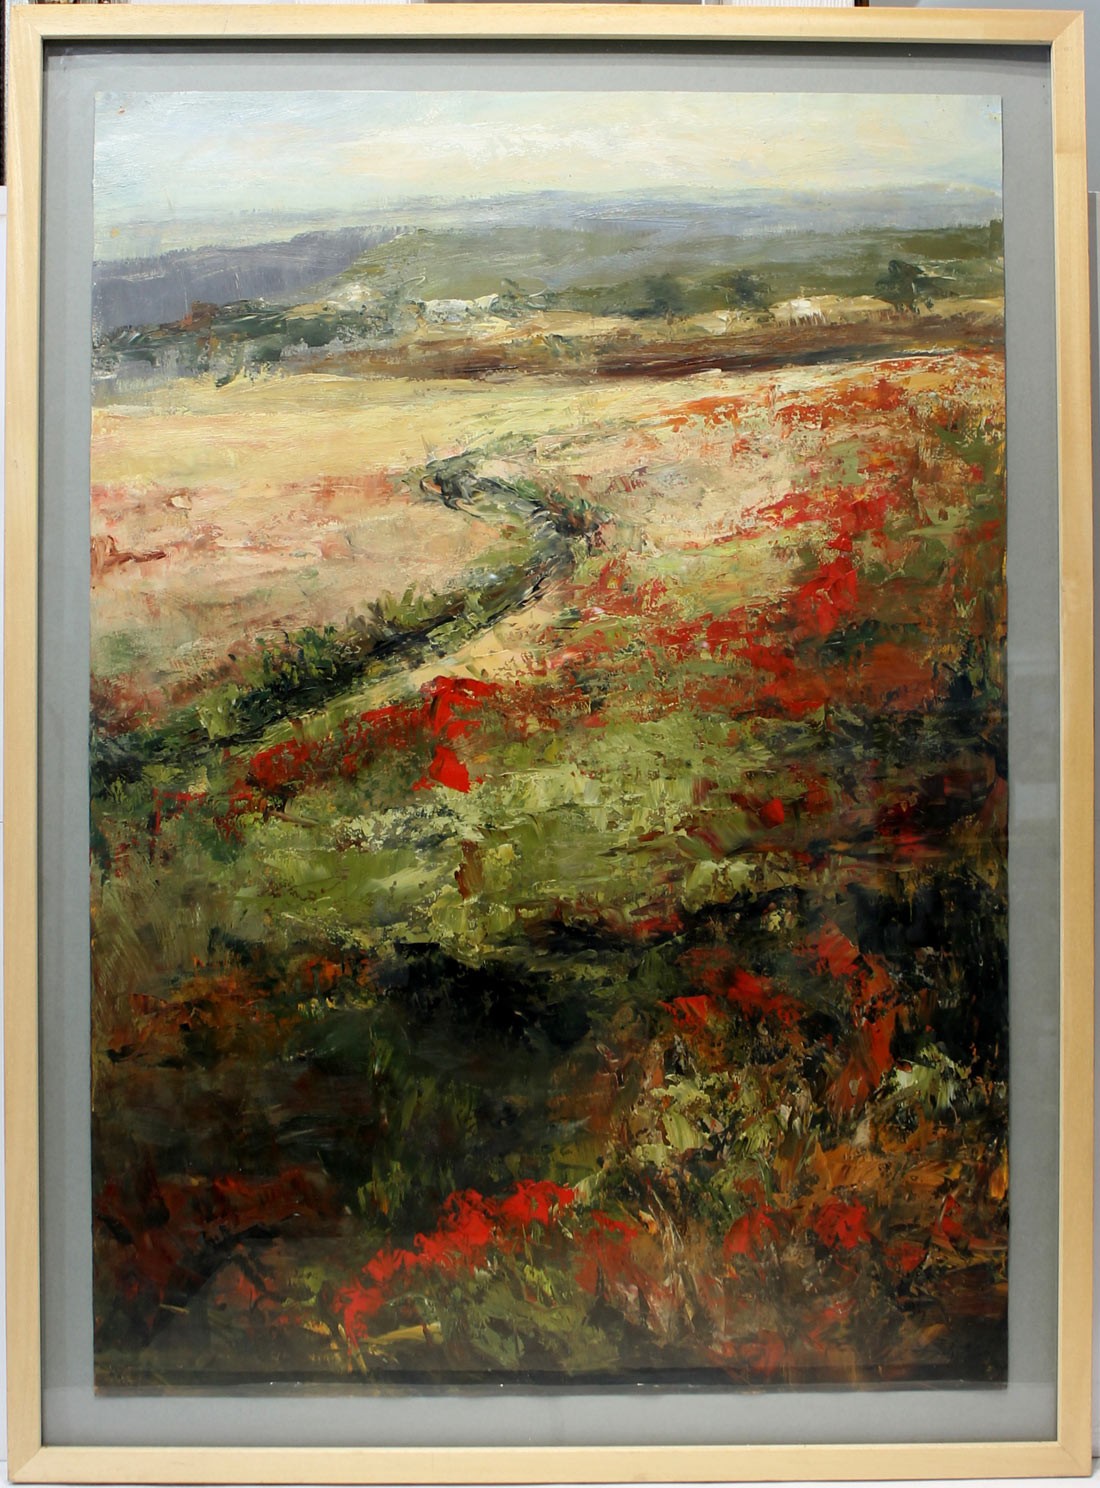 Ana Delgado: Landscape